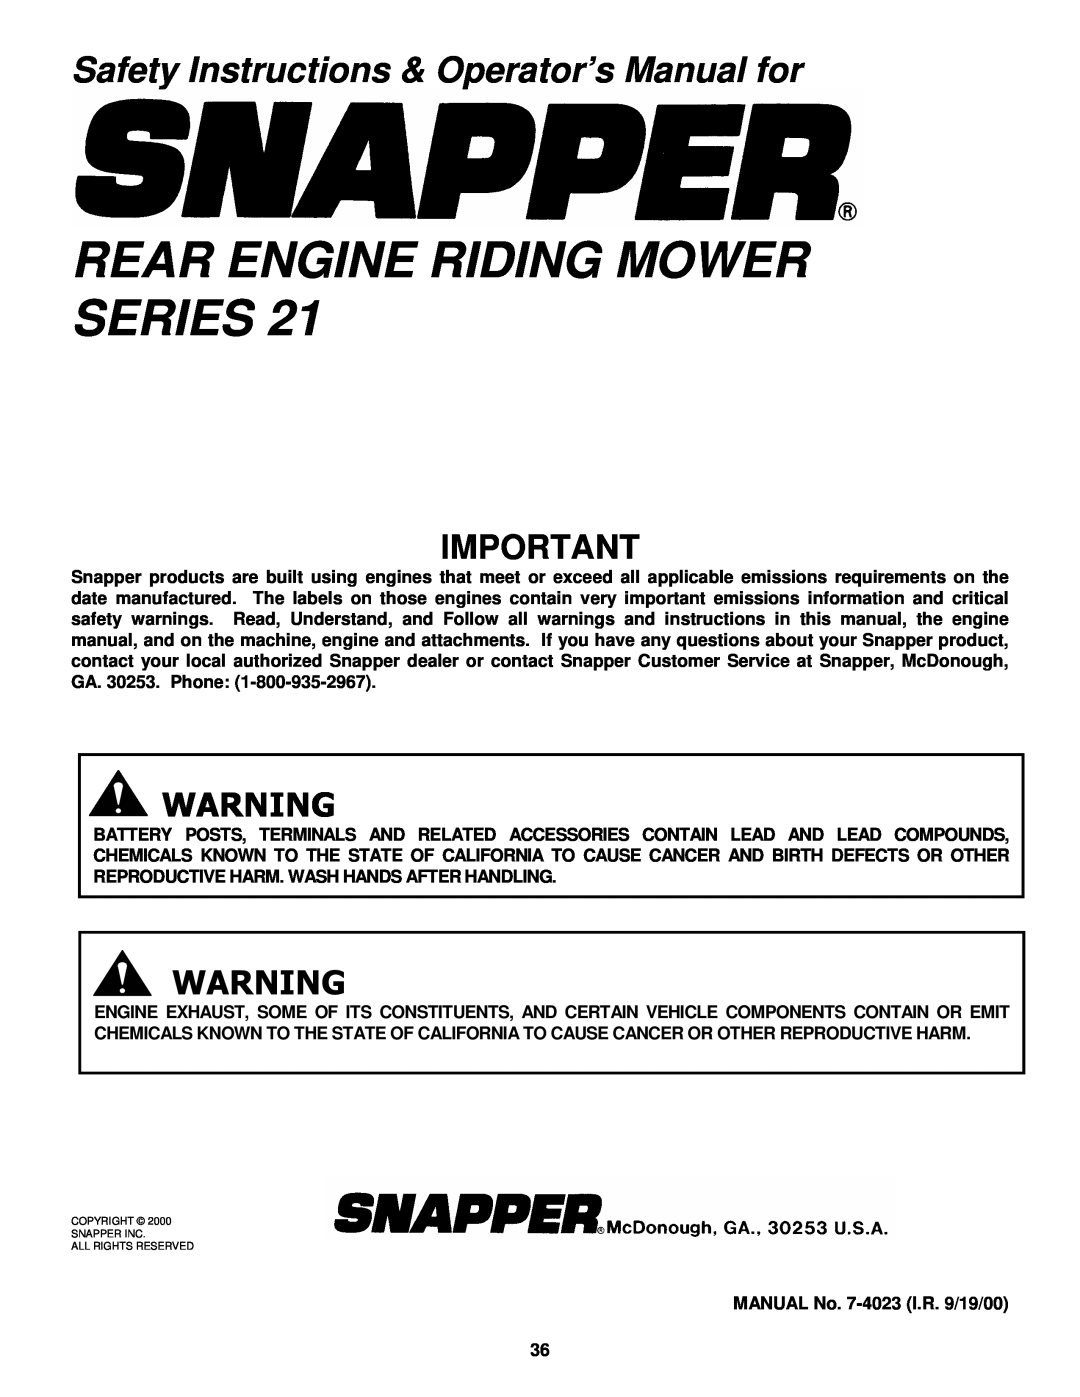 Snapper WM301021BE, M250821BE, M280921B, M281021BE, M300921B, M301021BE, WM280921B Rear Engine Riding Mower Series 